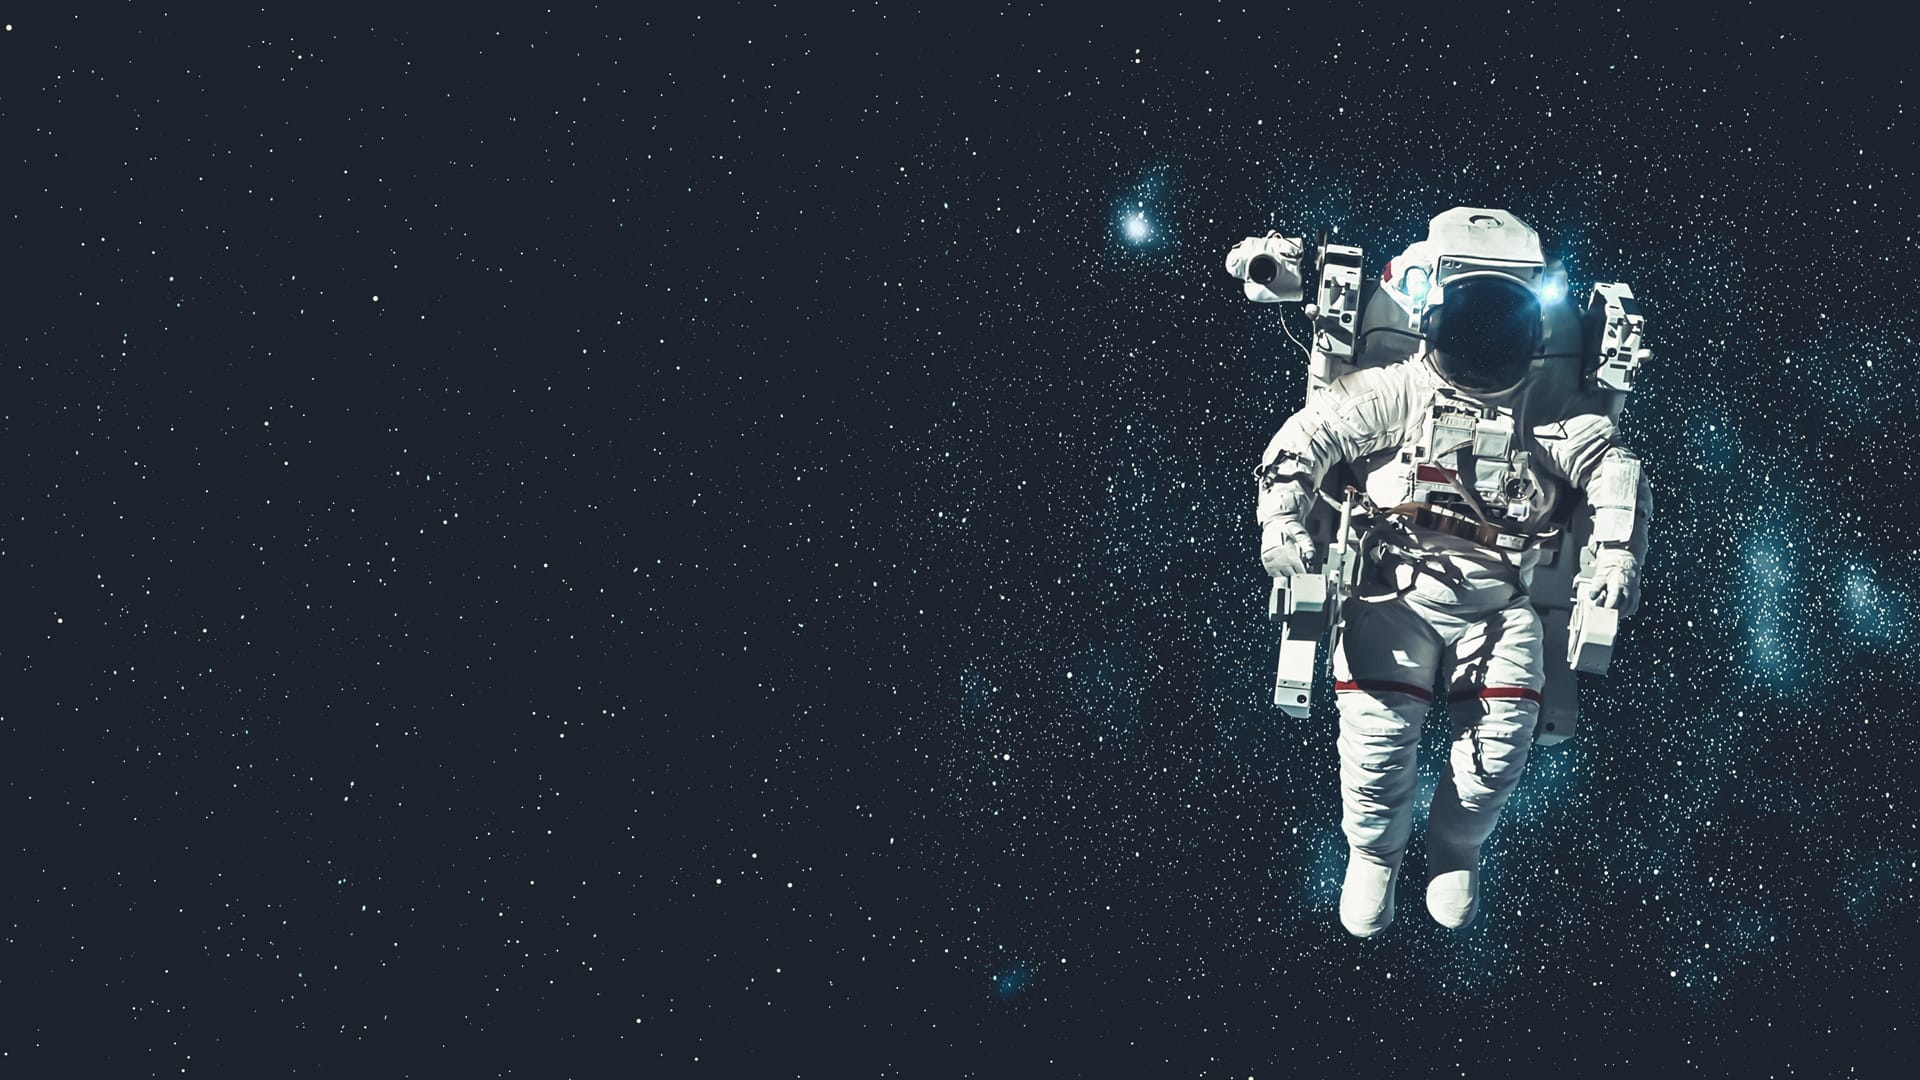 Astronaut spaceman spacewalk while working spaceflight mission